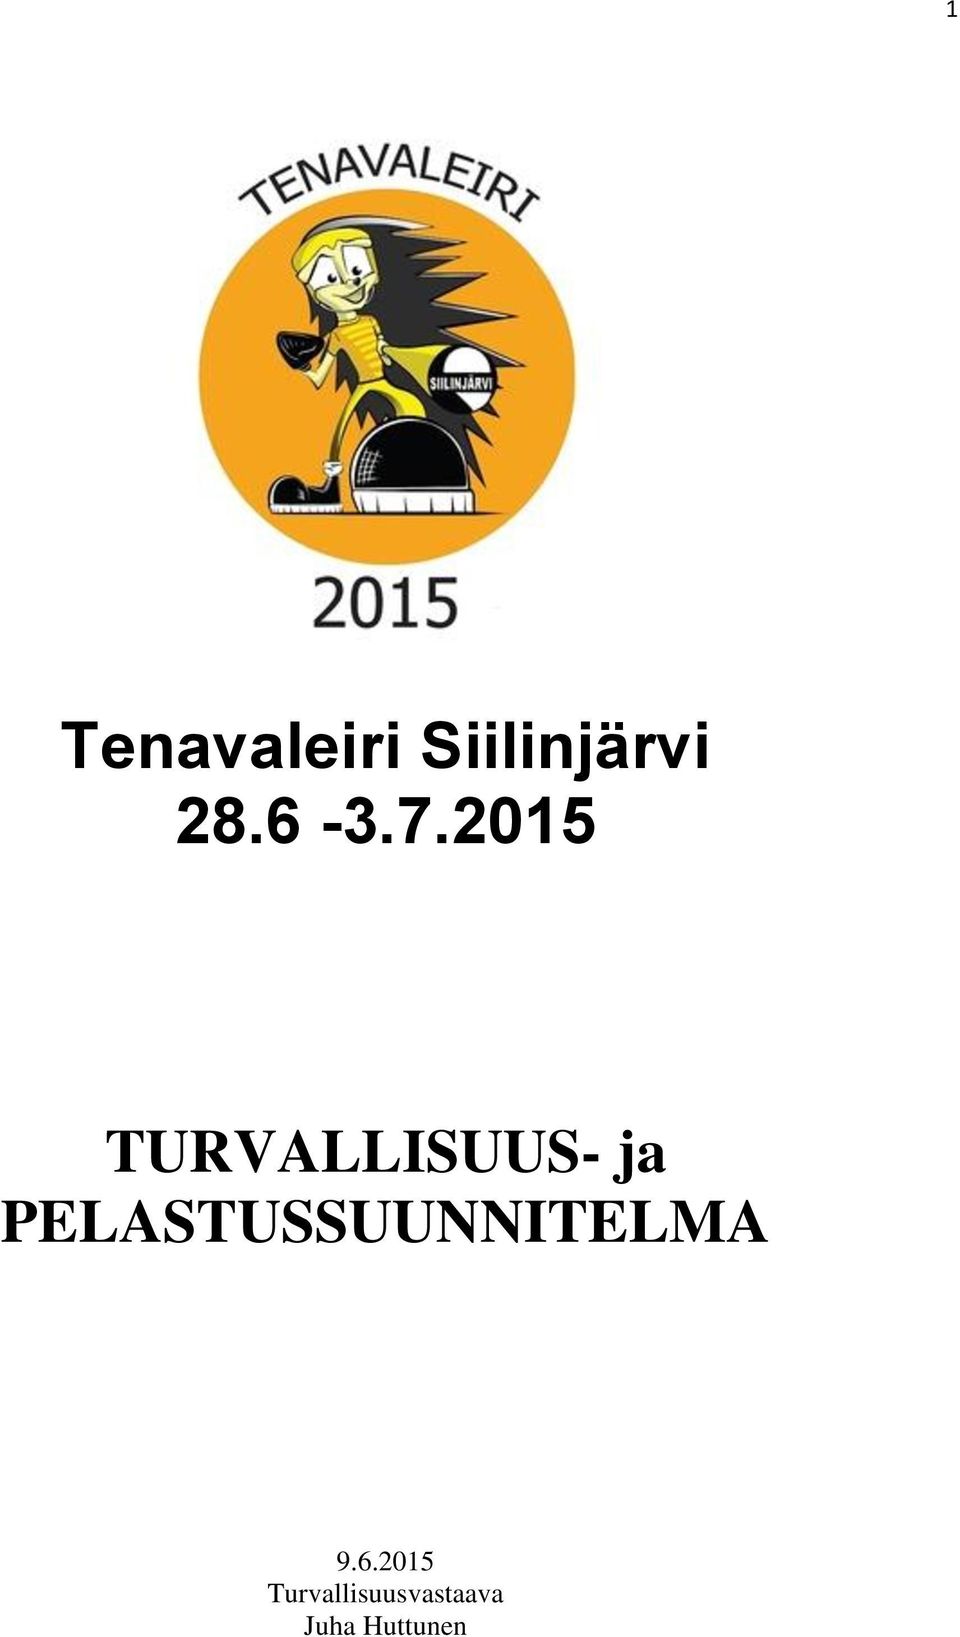 2015 TURVALLISUUS- ja